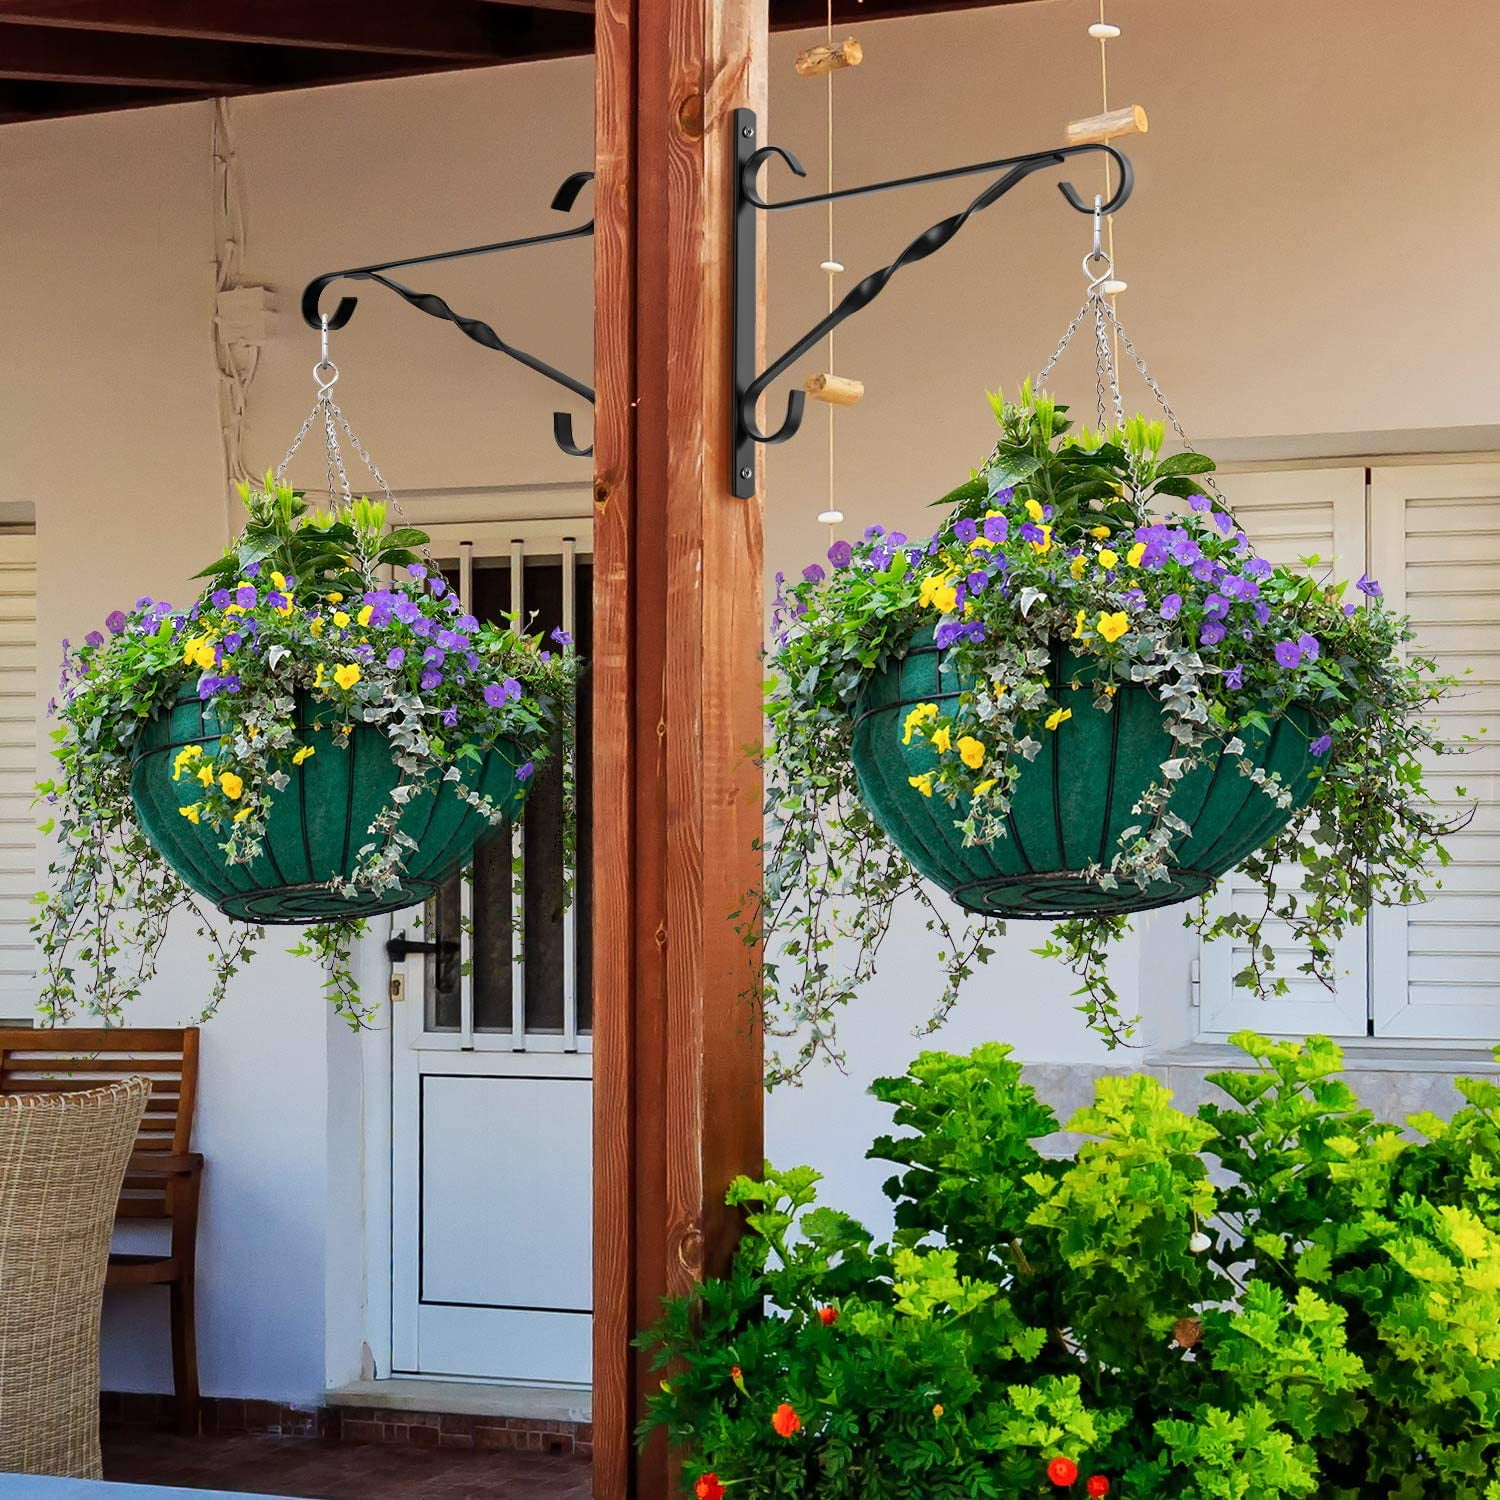 for Hanging Flower Pots 5-15" Green Plastic Hangers for Hanging Baskets